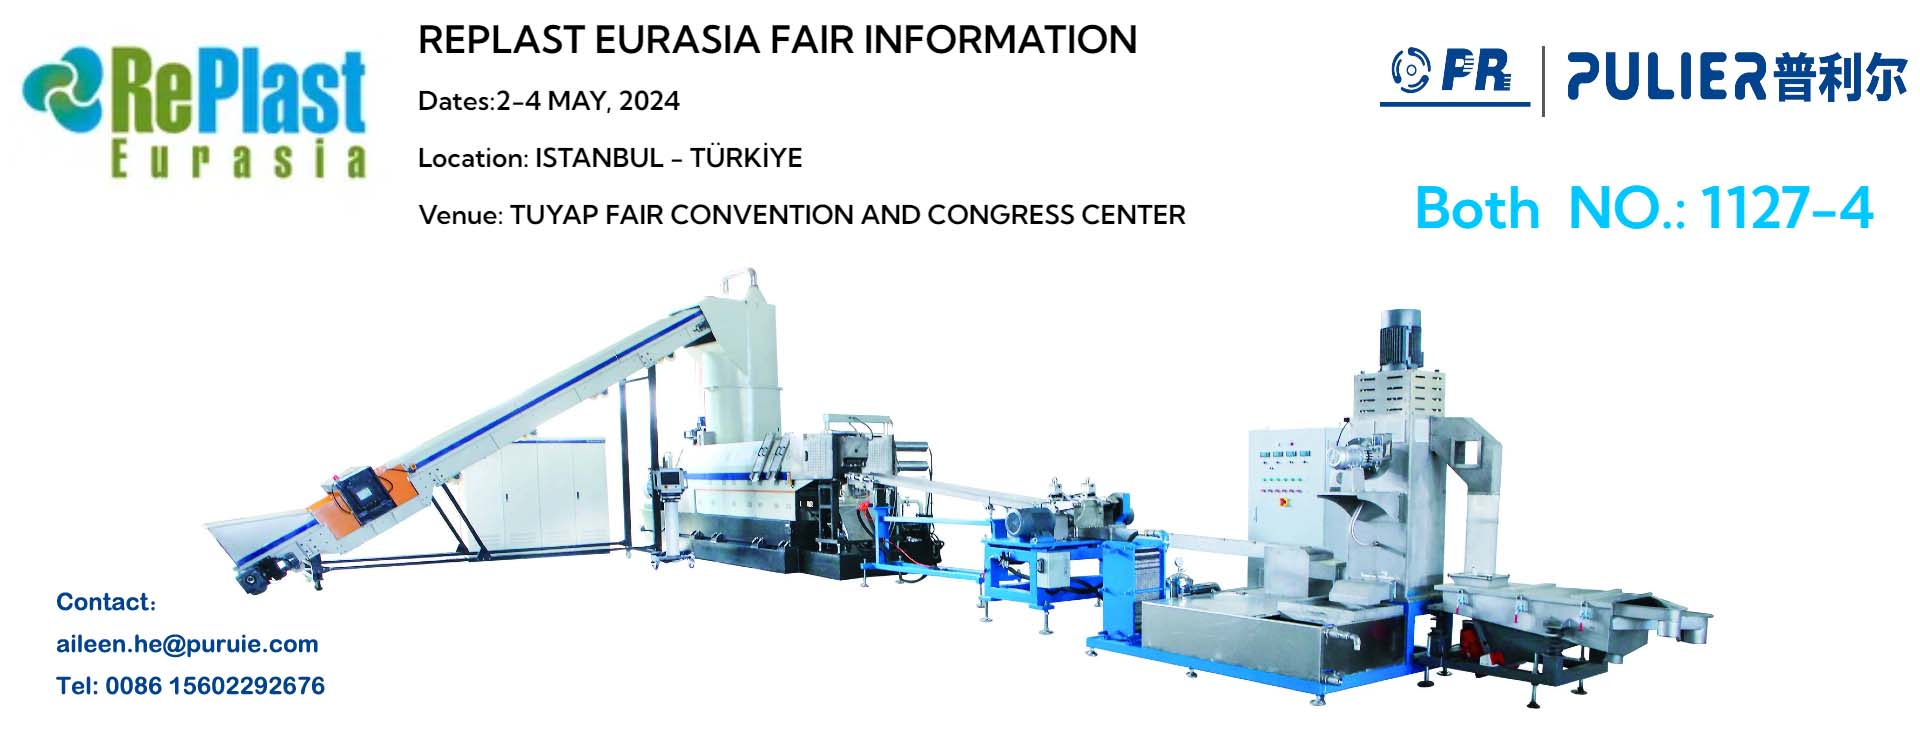 RePlast Eurasia fair in Istanbul Turkey